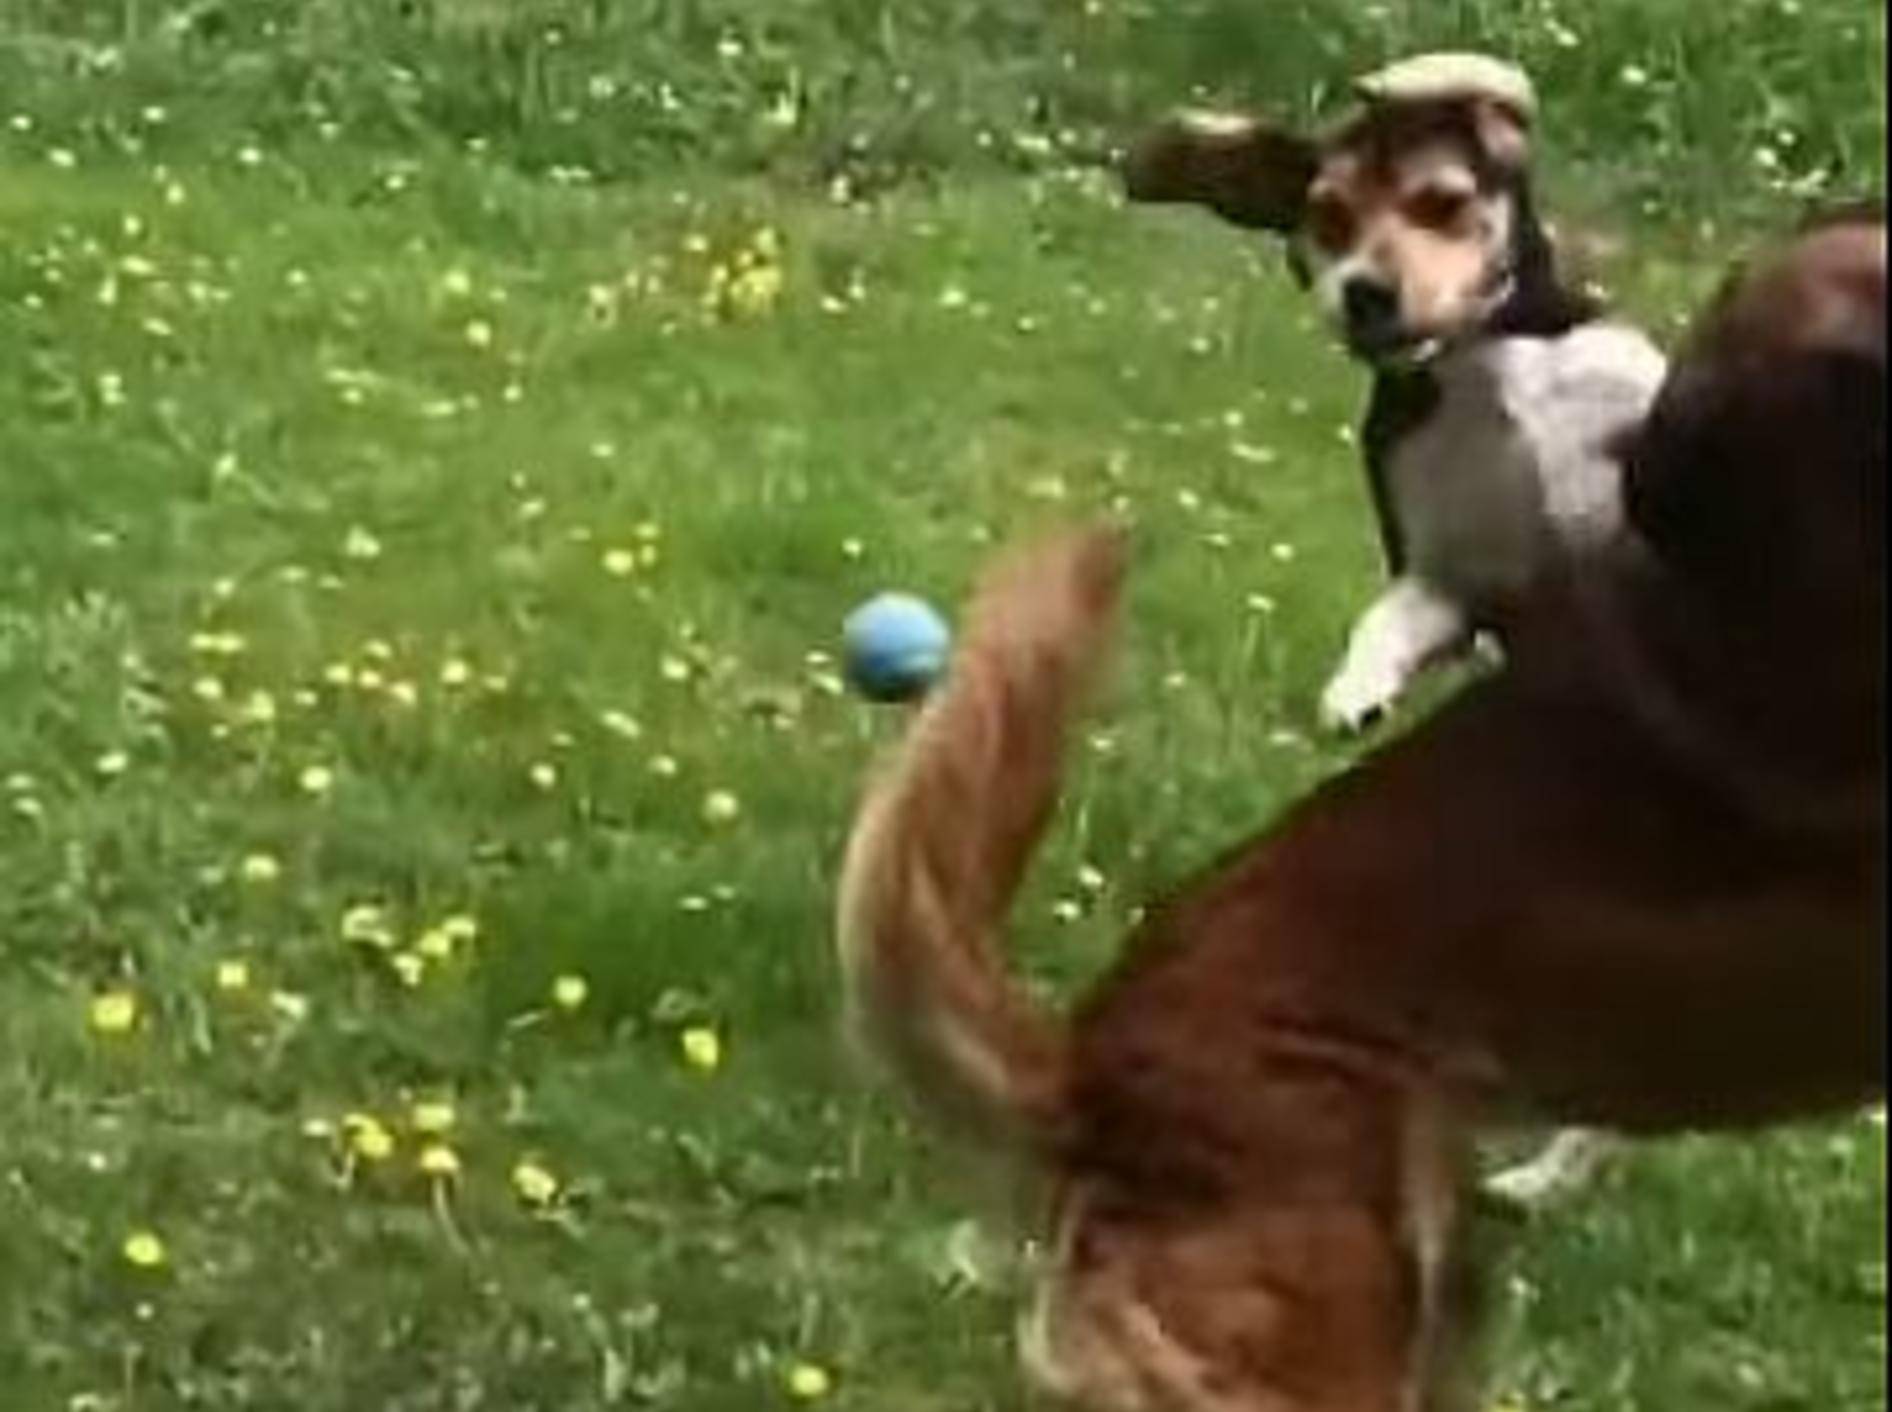 Hundekumpels präsentieren: Ballspielen für Anfänger – Bild: Youtube / unperfect97